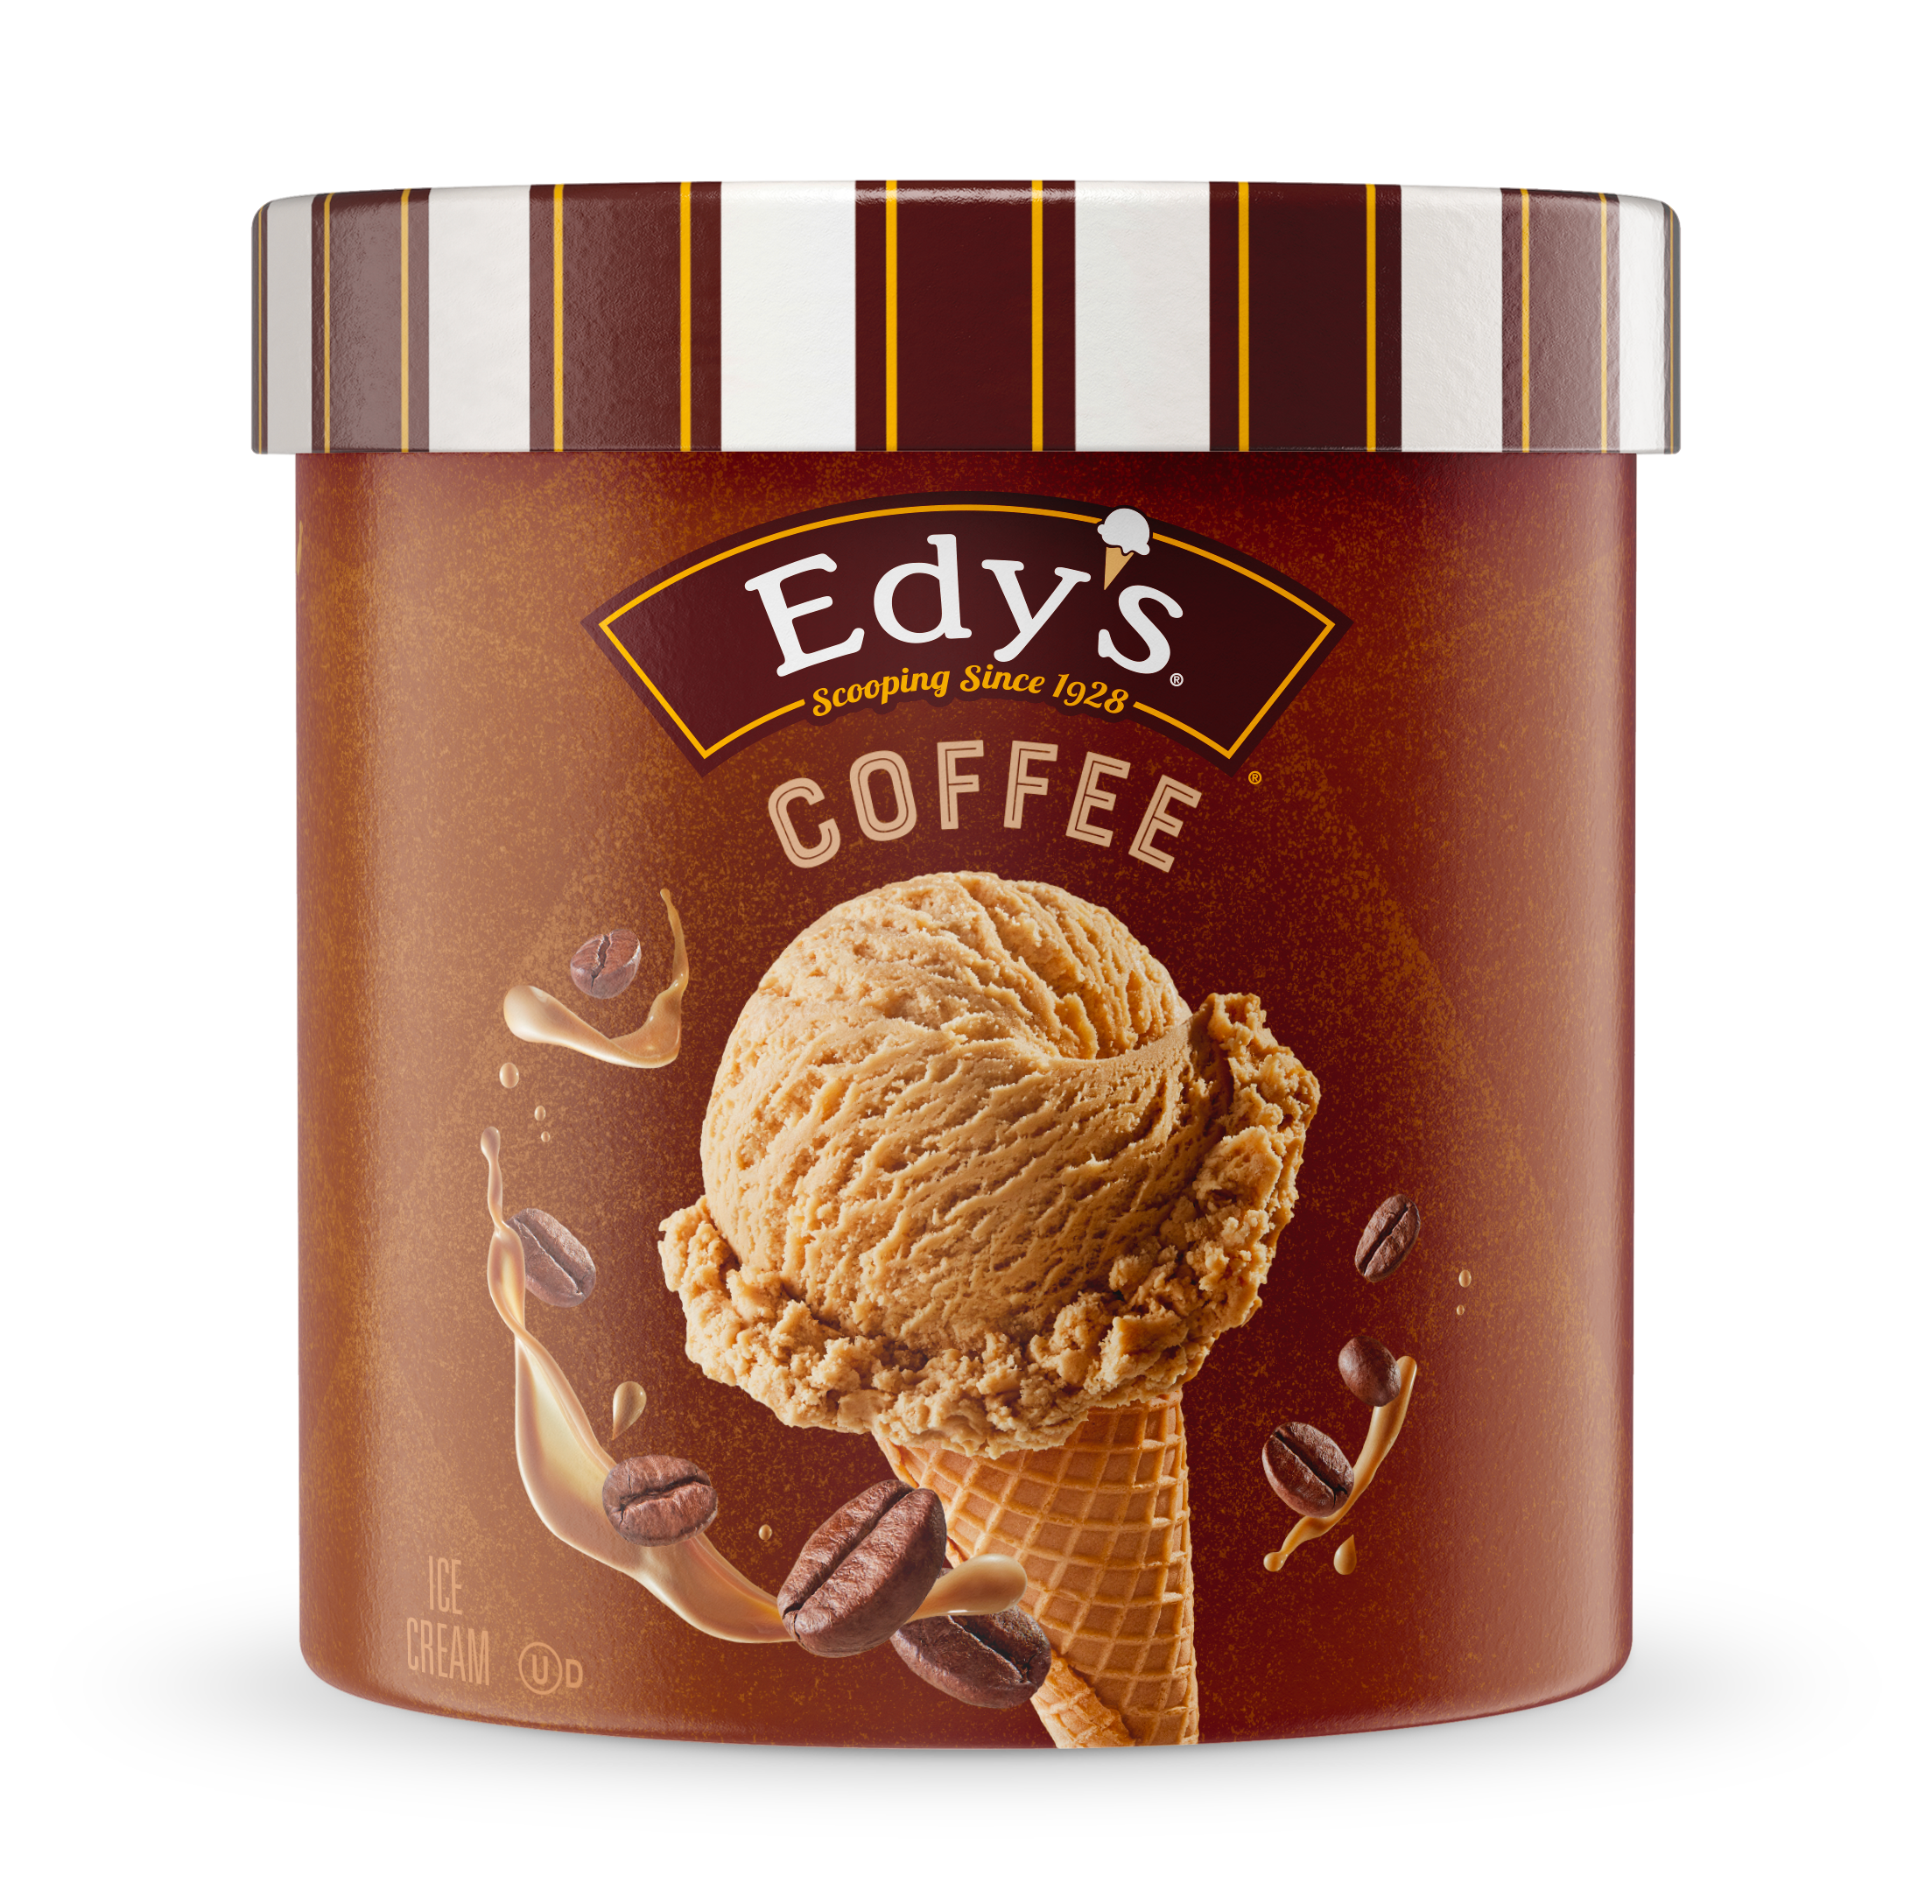 Carton of Edy's coffee ice cream